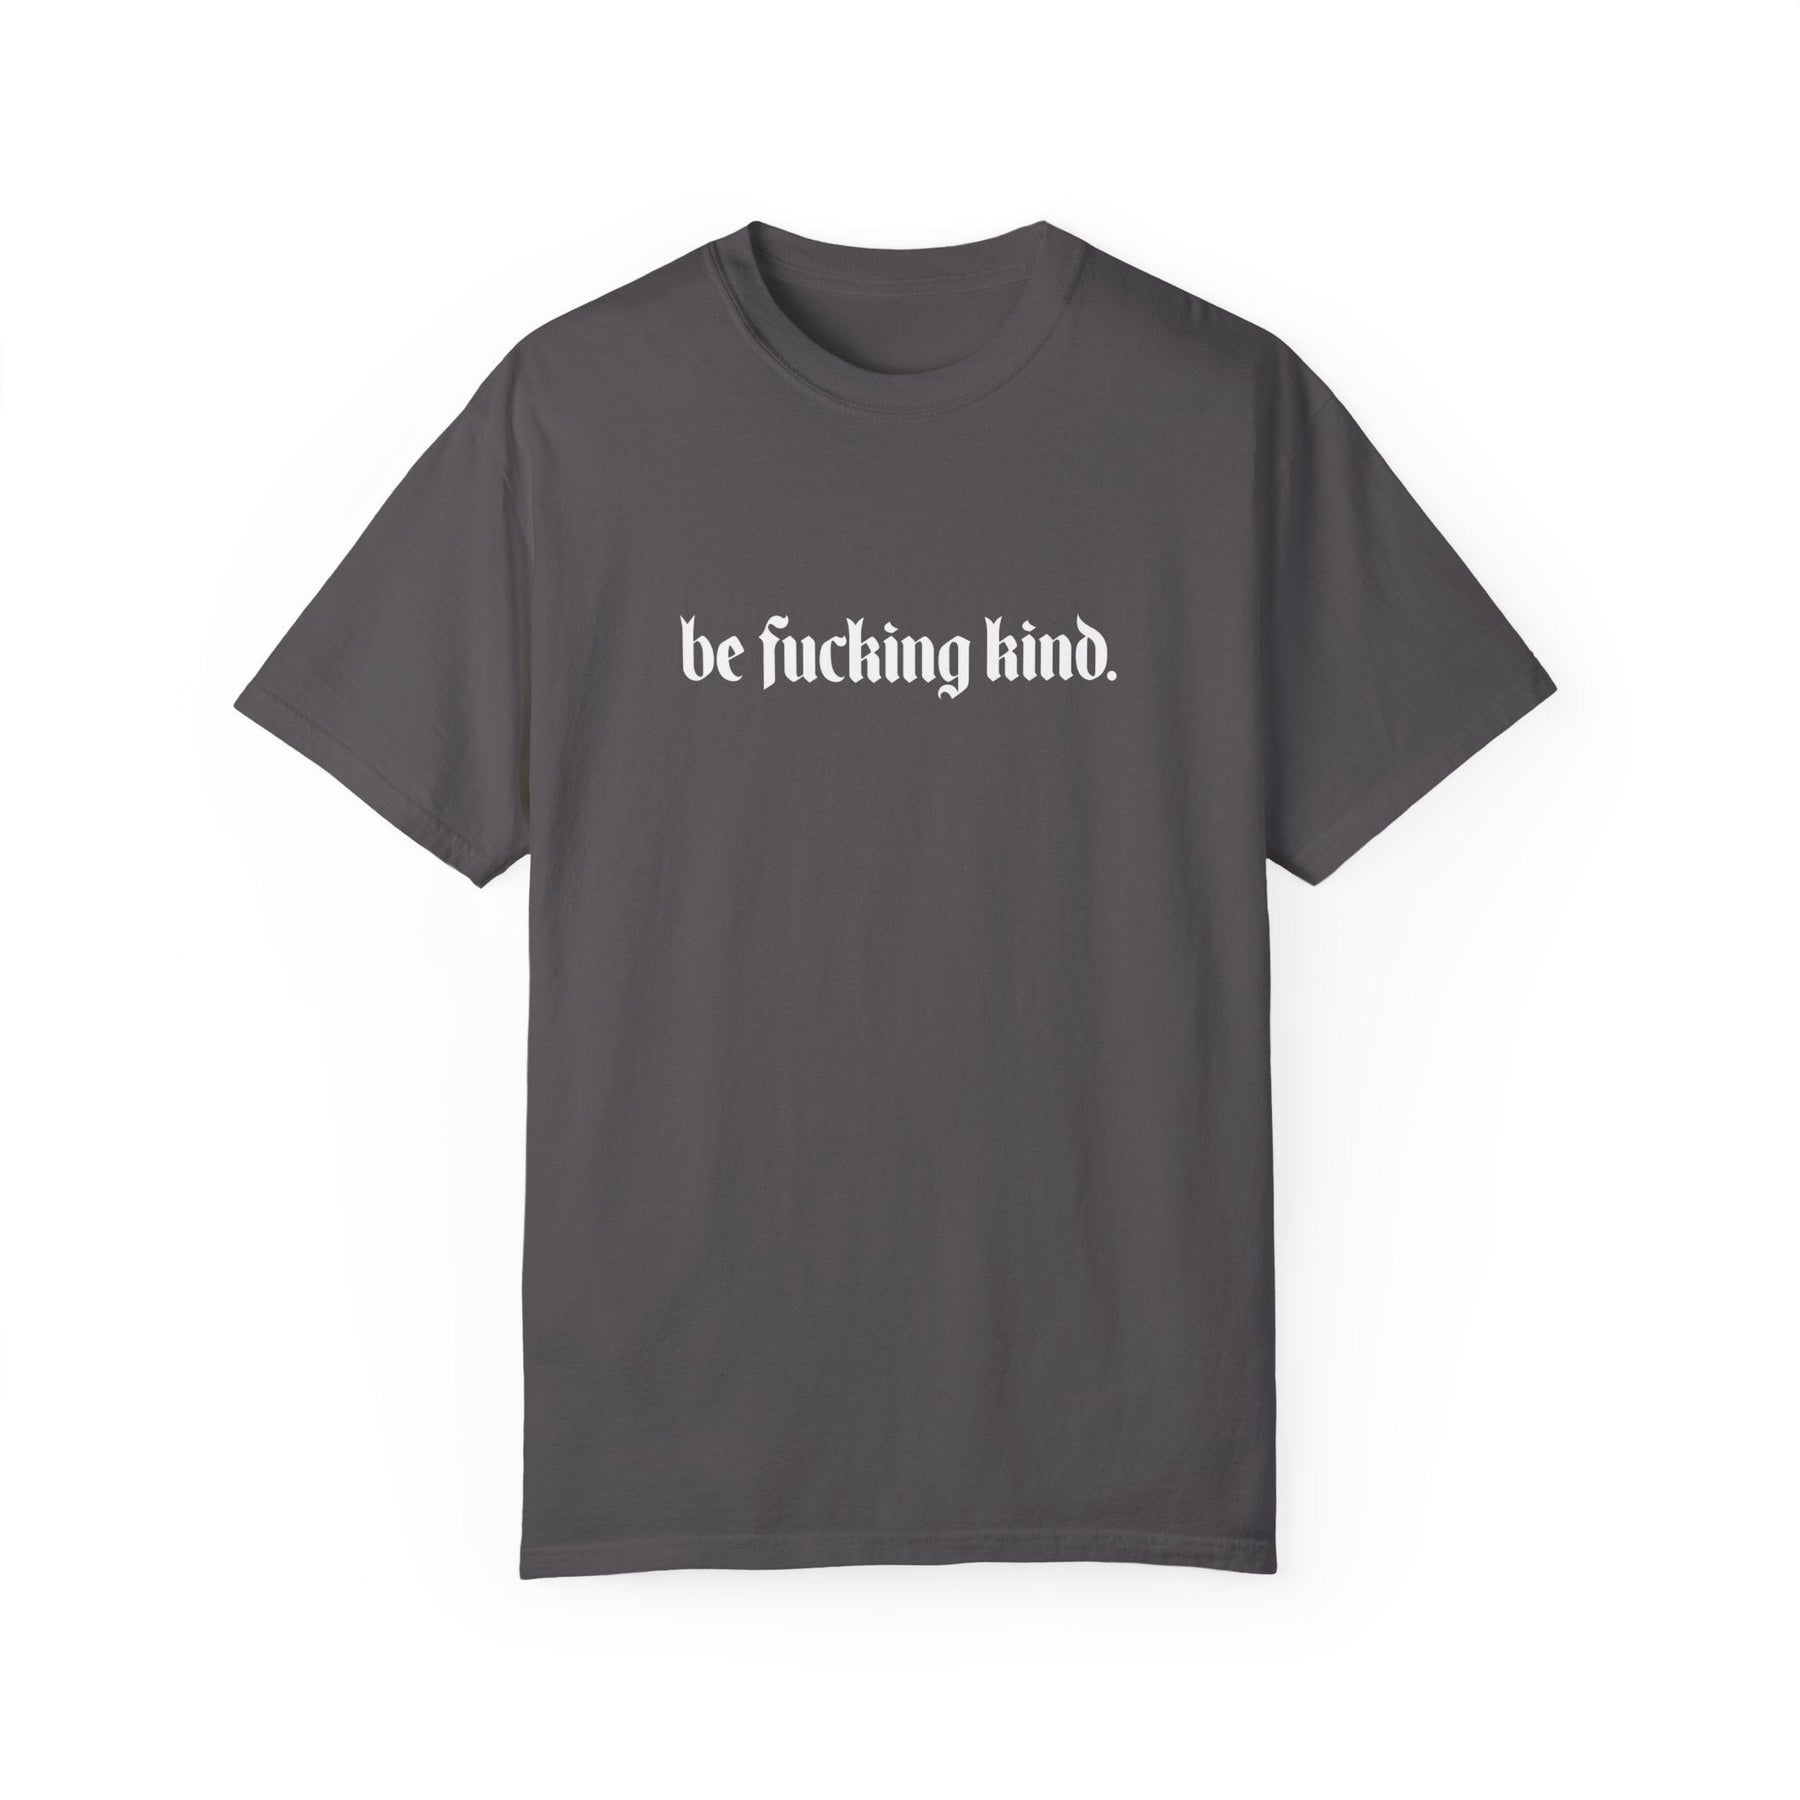 Be Fucking Kind Comfy Tee - Goth Cloth Co.T - Shirt18028308995329394839